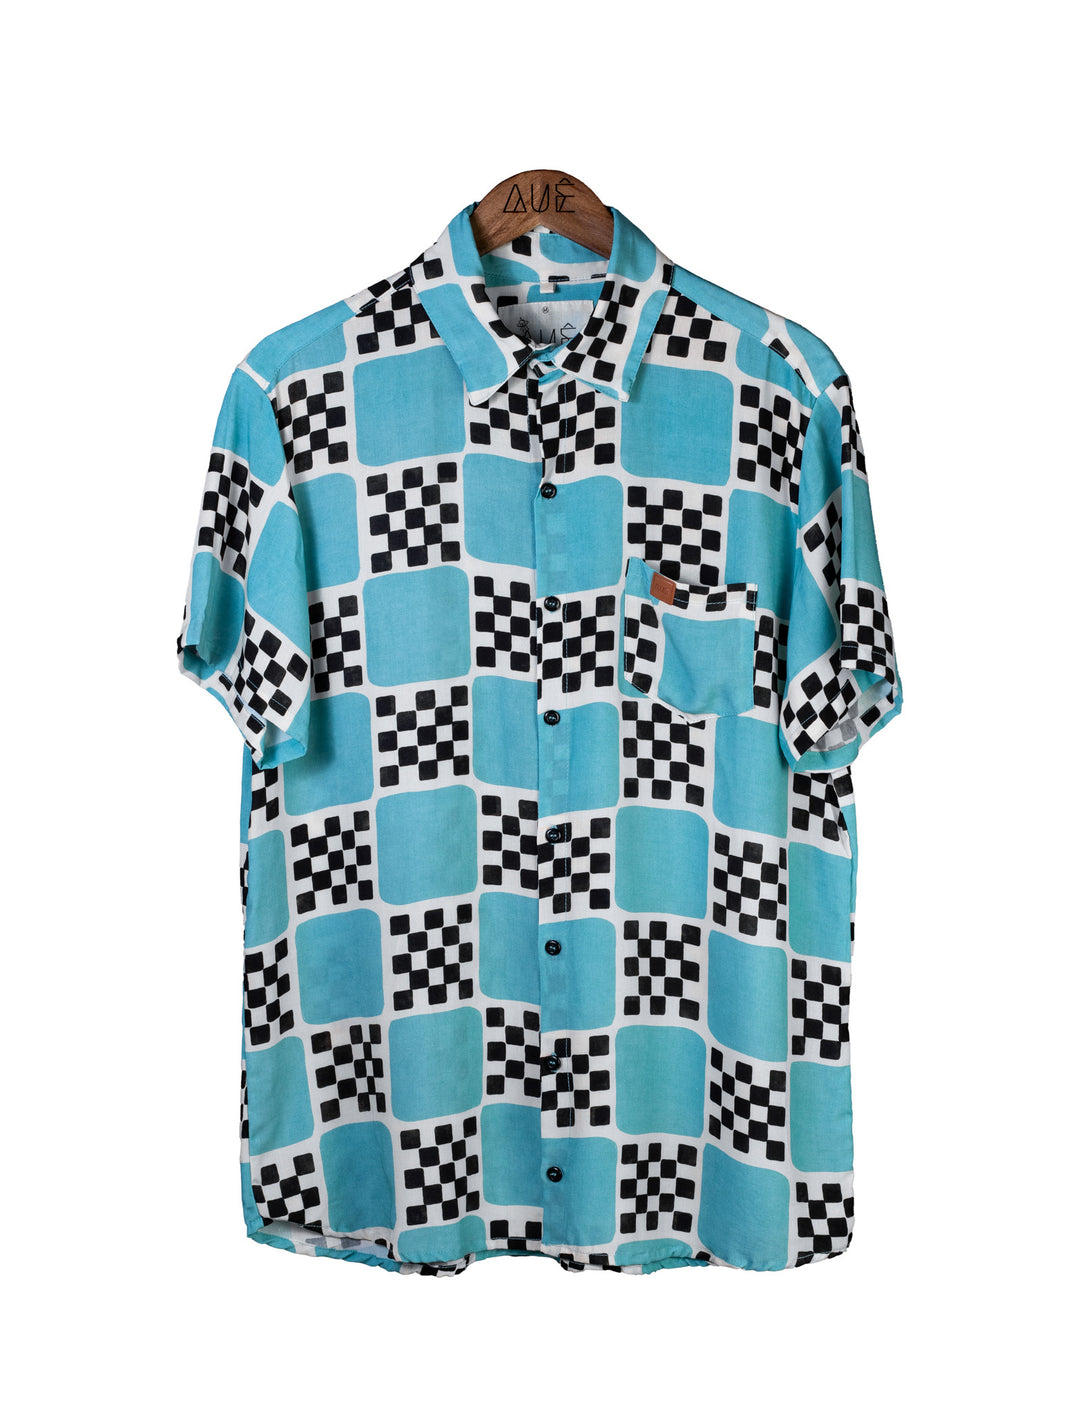 Chess on The Bitch Shirt